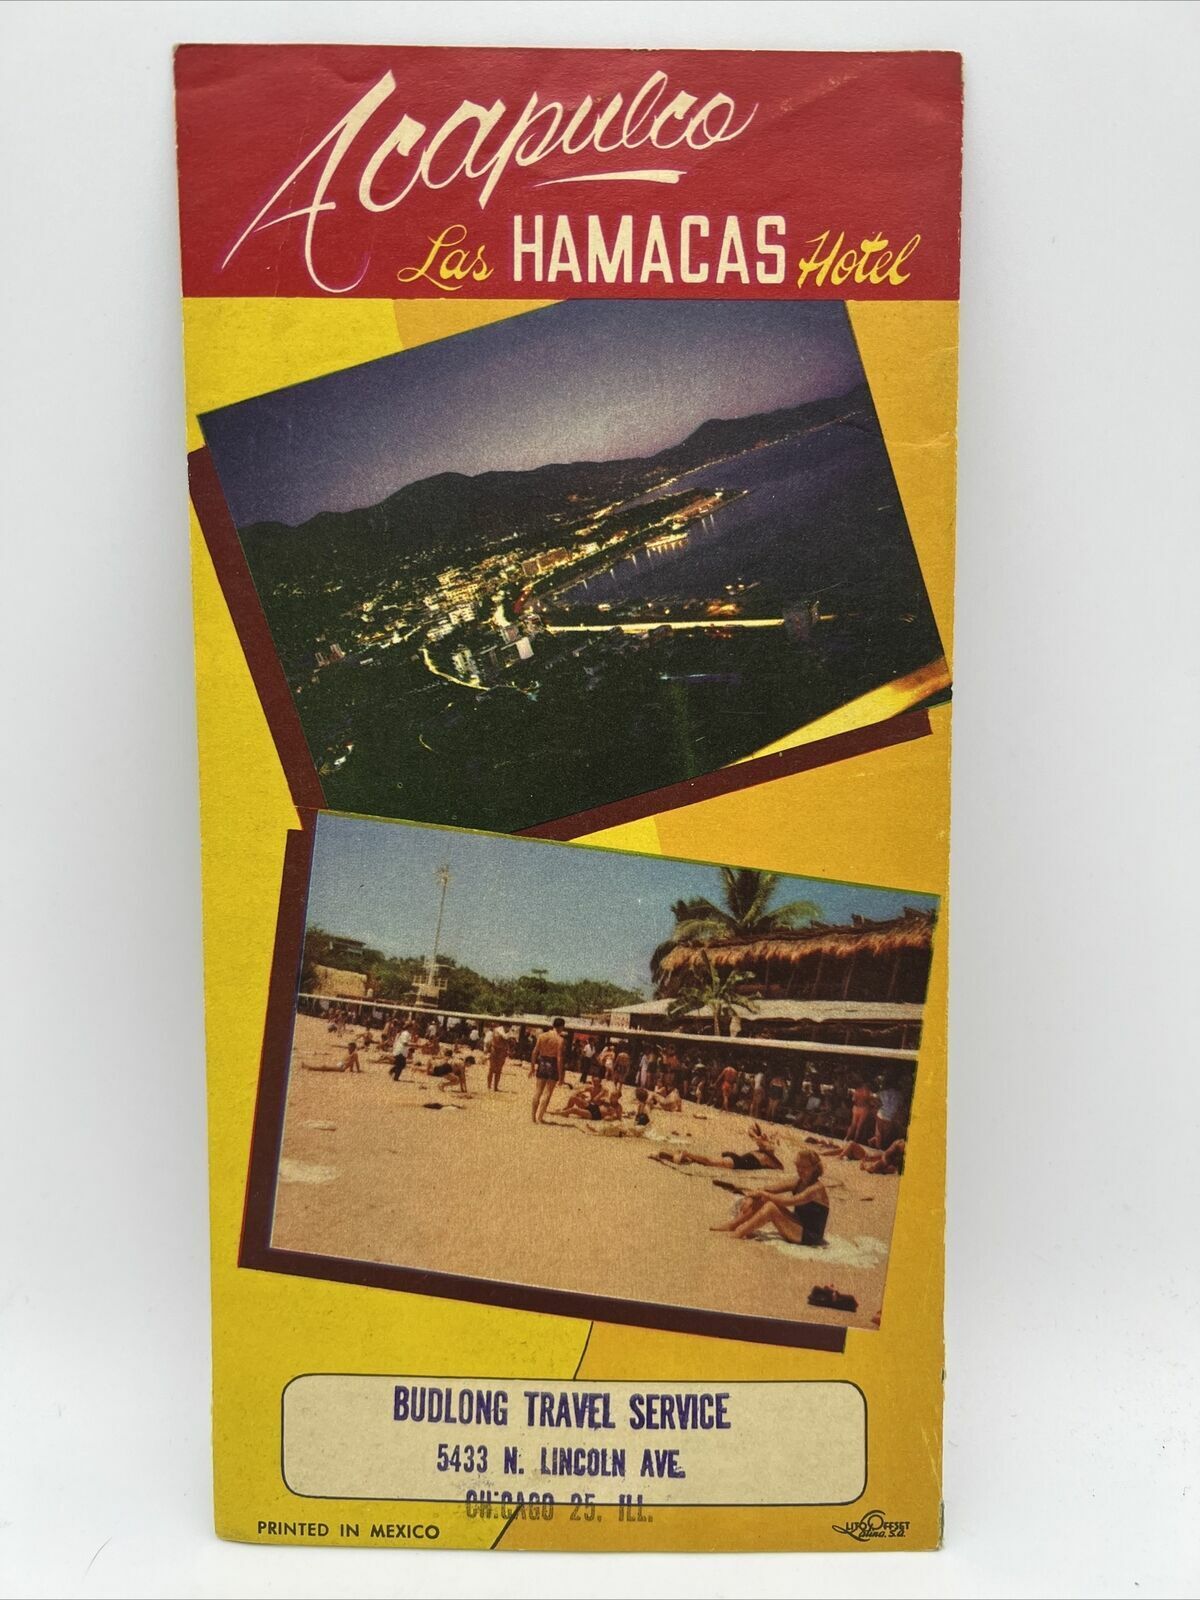 1965 LAS HAMACAS HOTEL ACAPULCO MEXICO Budlong Travel Guide Brochure Chicago IL